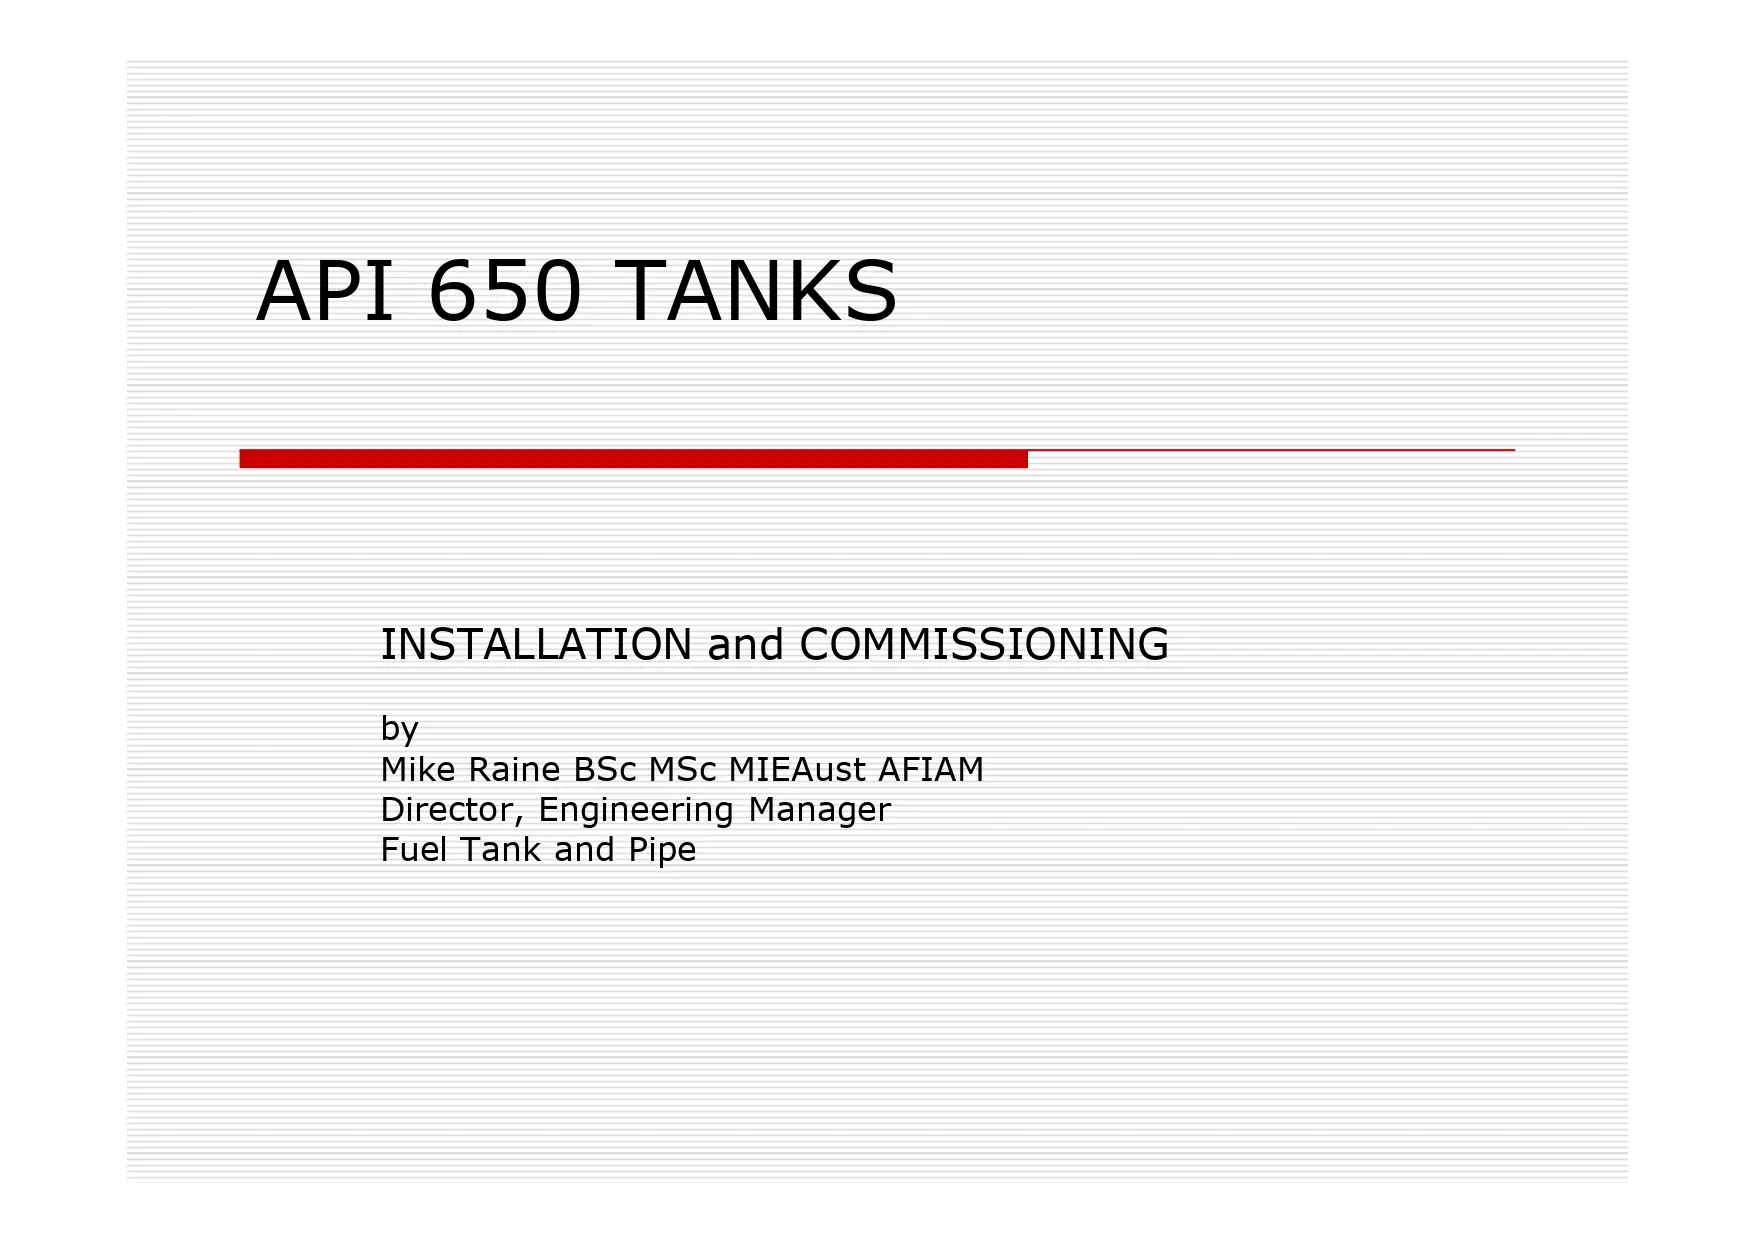 API 650 Tanks